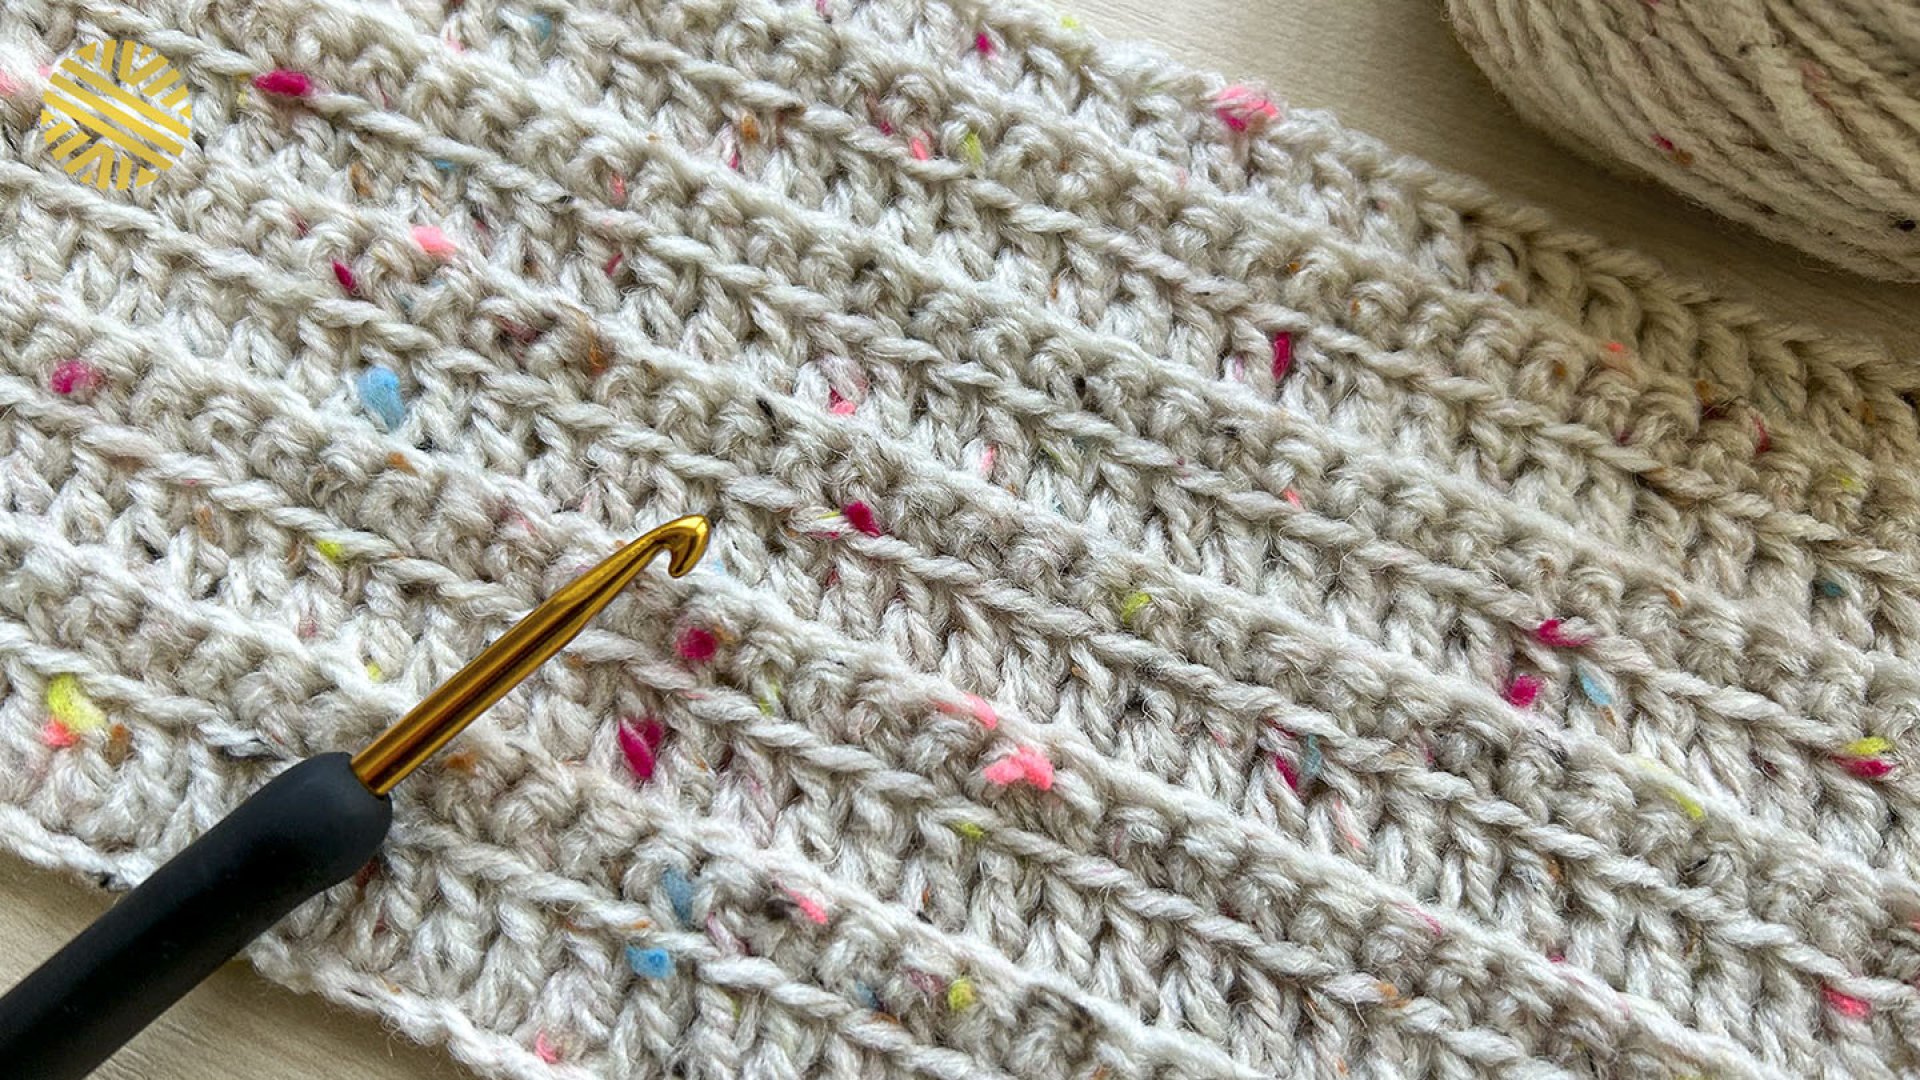 SUPER EASY Crochet Pattern for Beginners. WONDERFUL Crochet Stitch